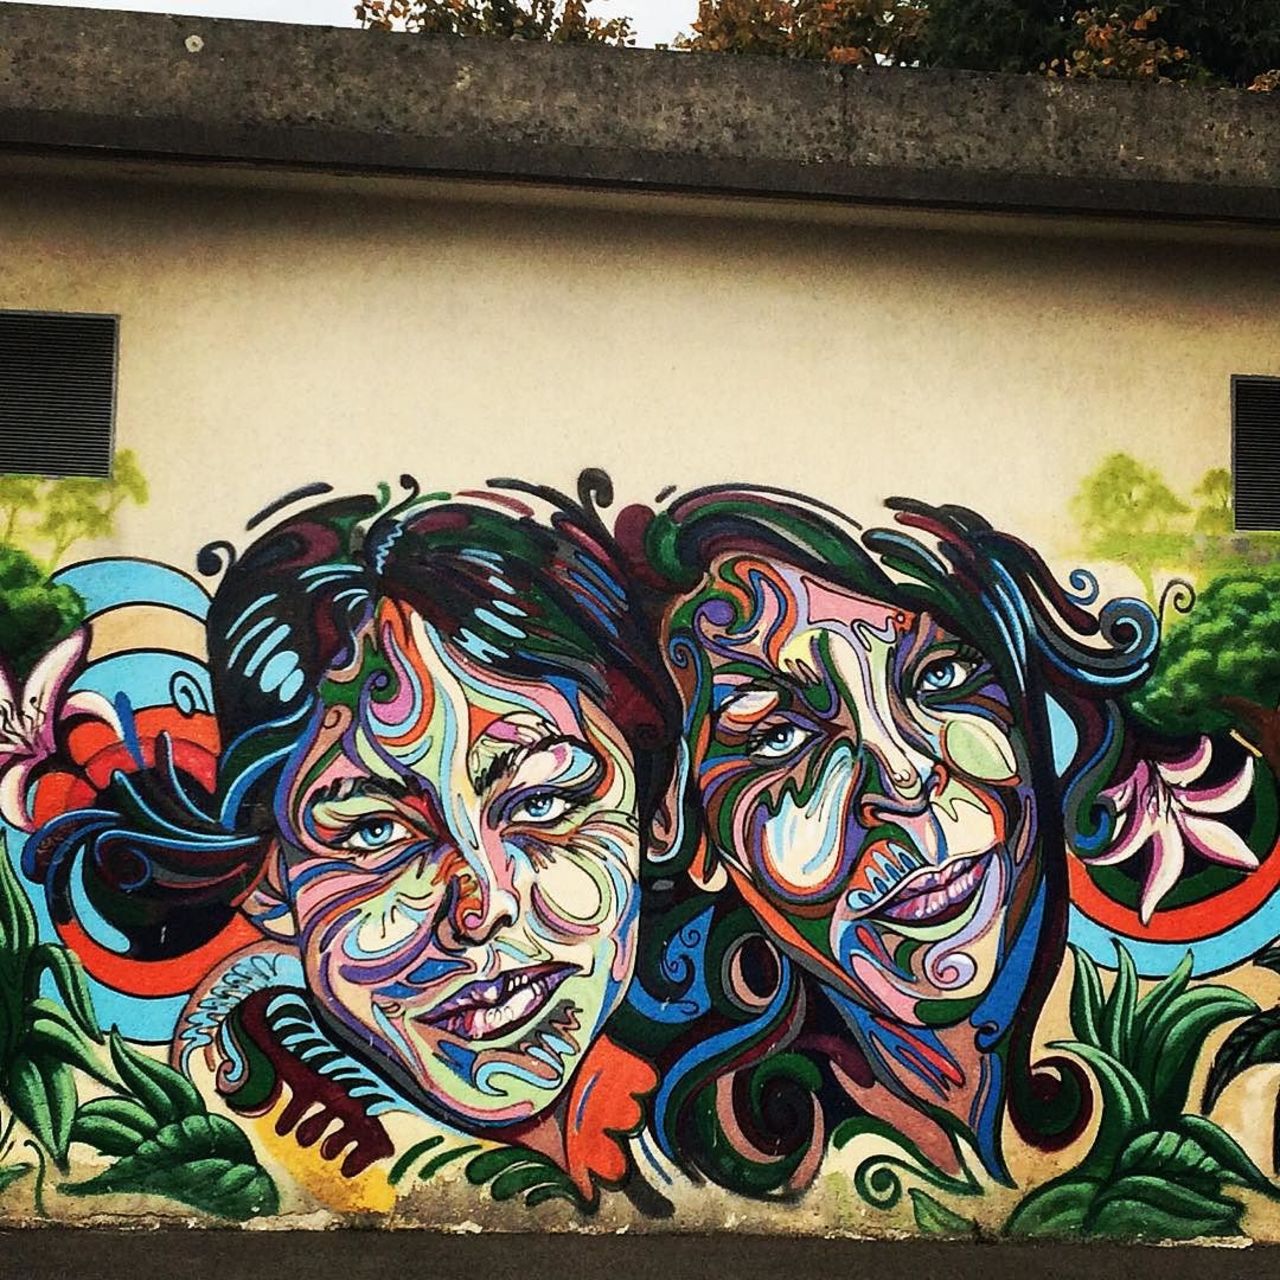 #Paris #graffiti photo by @julosteart http://ift.tt/1i3waaF #StreetArt https://t.co/XXiGaOchHA